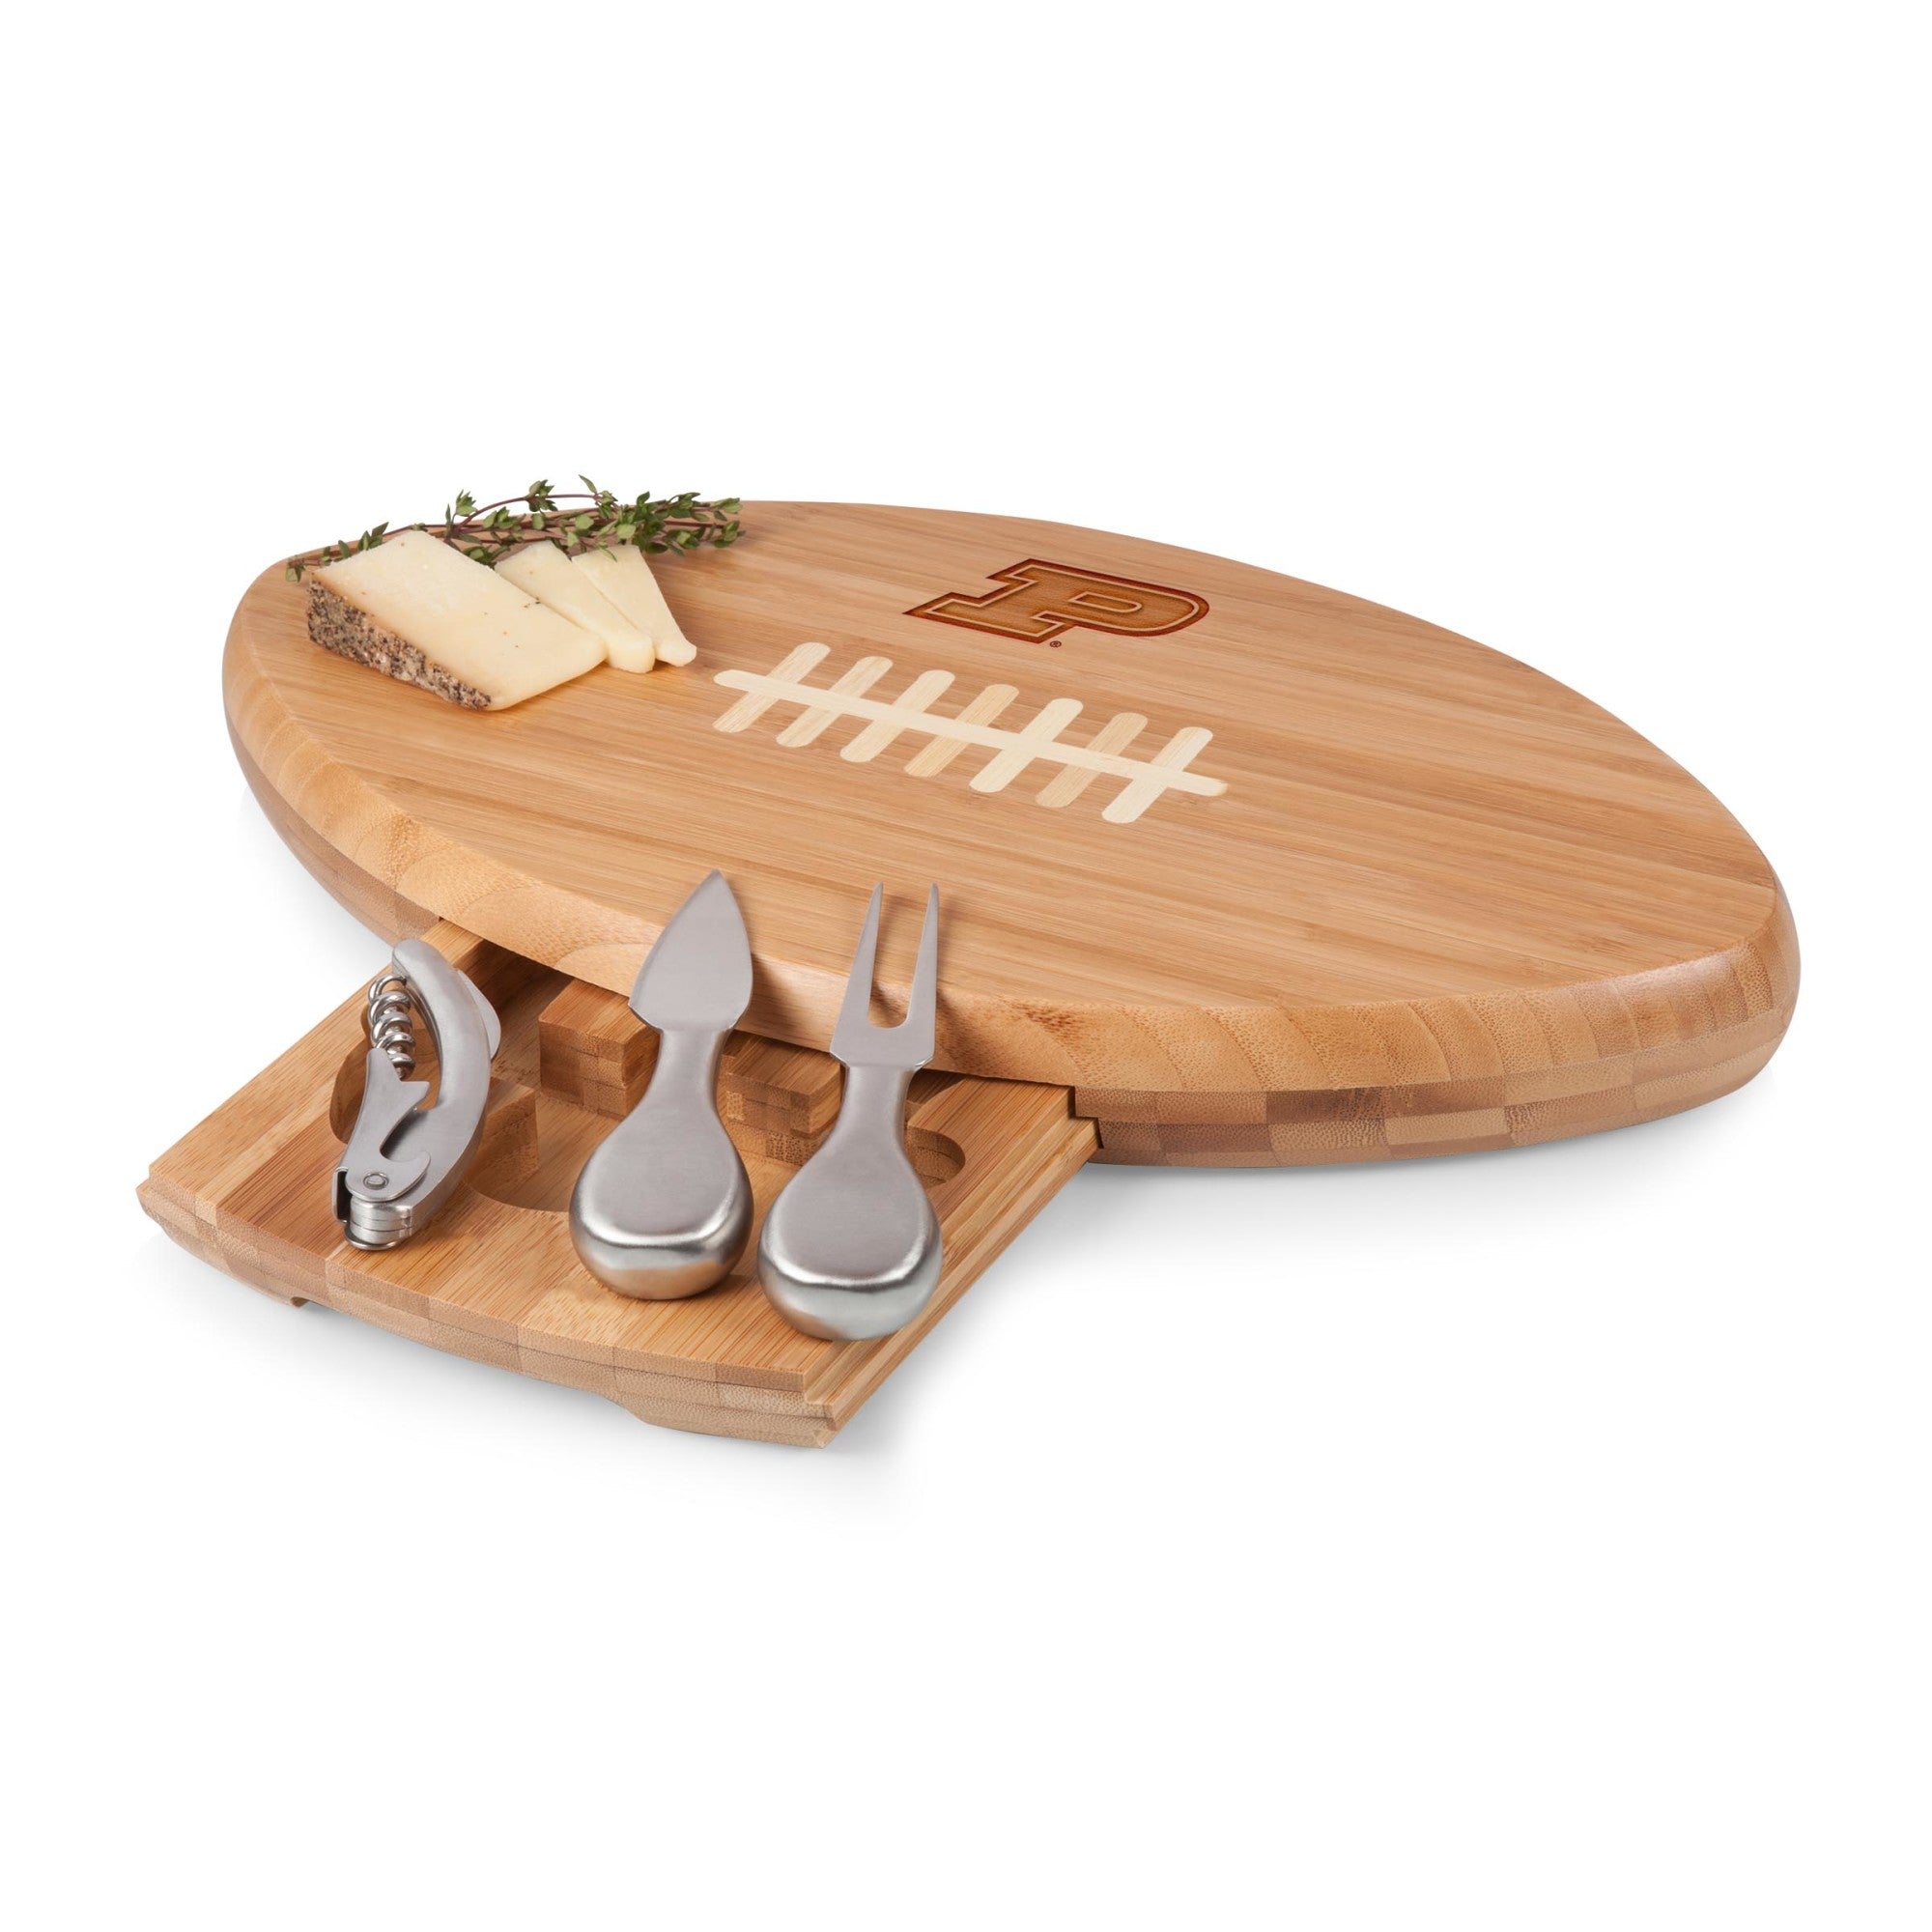 Purdue Boilermakers - Quarterback Football Cheese Cutting Board & Tools Set, (Bamboo)